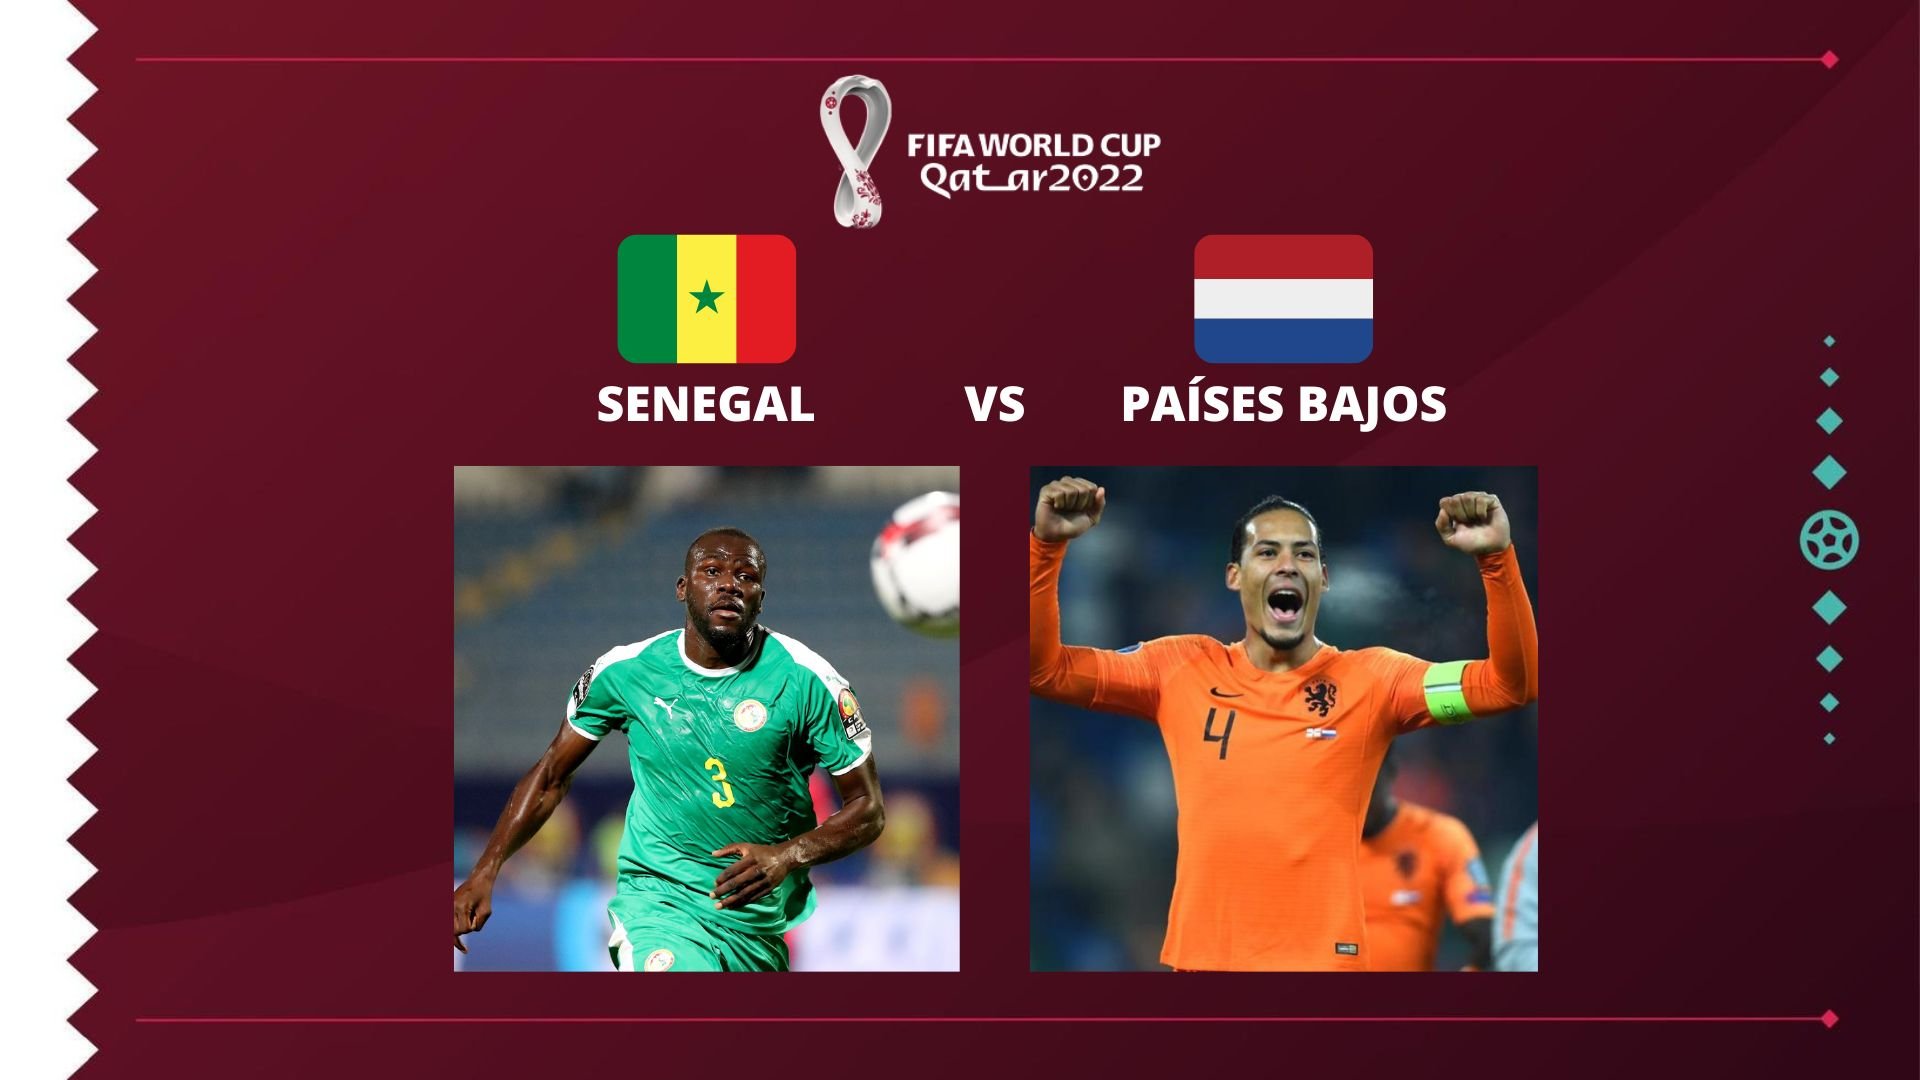 Senegal vs. paises bajos